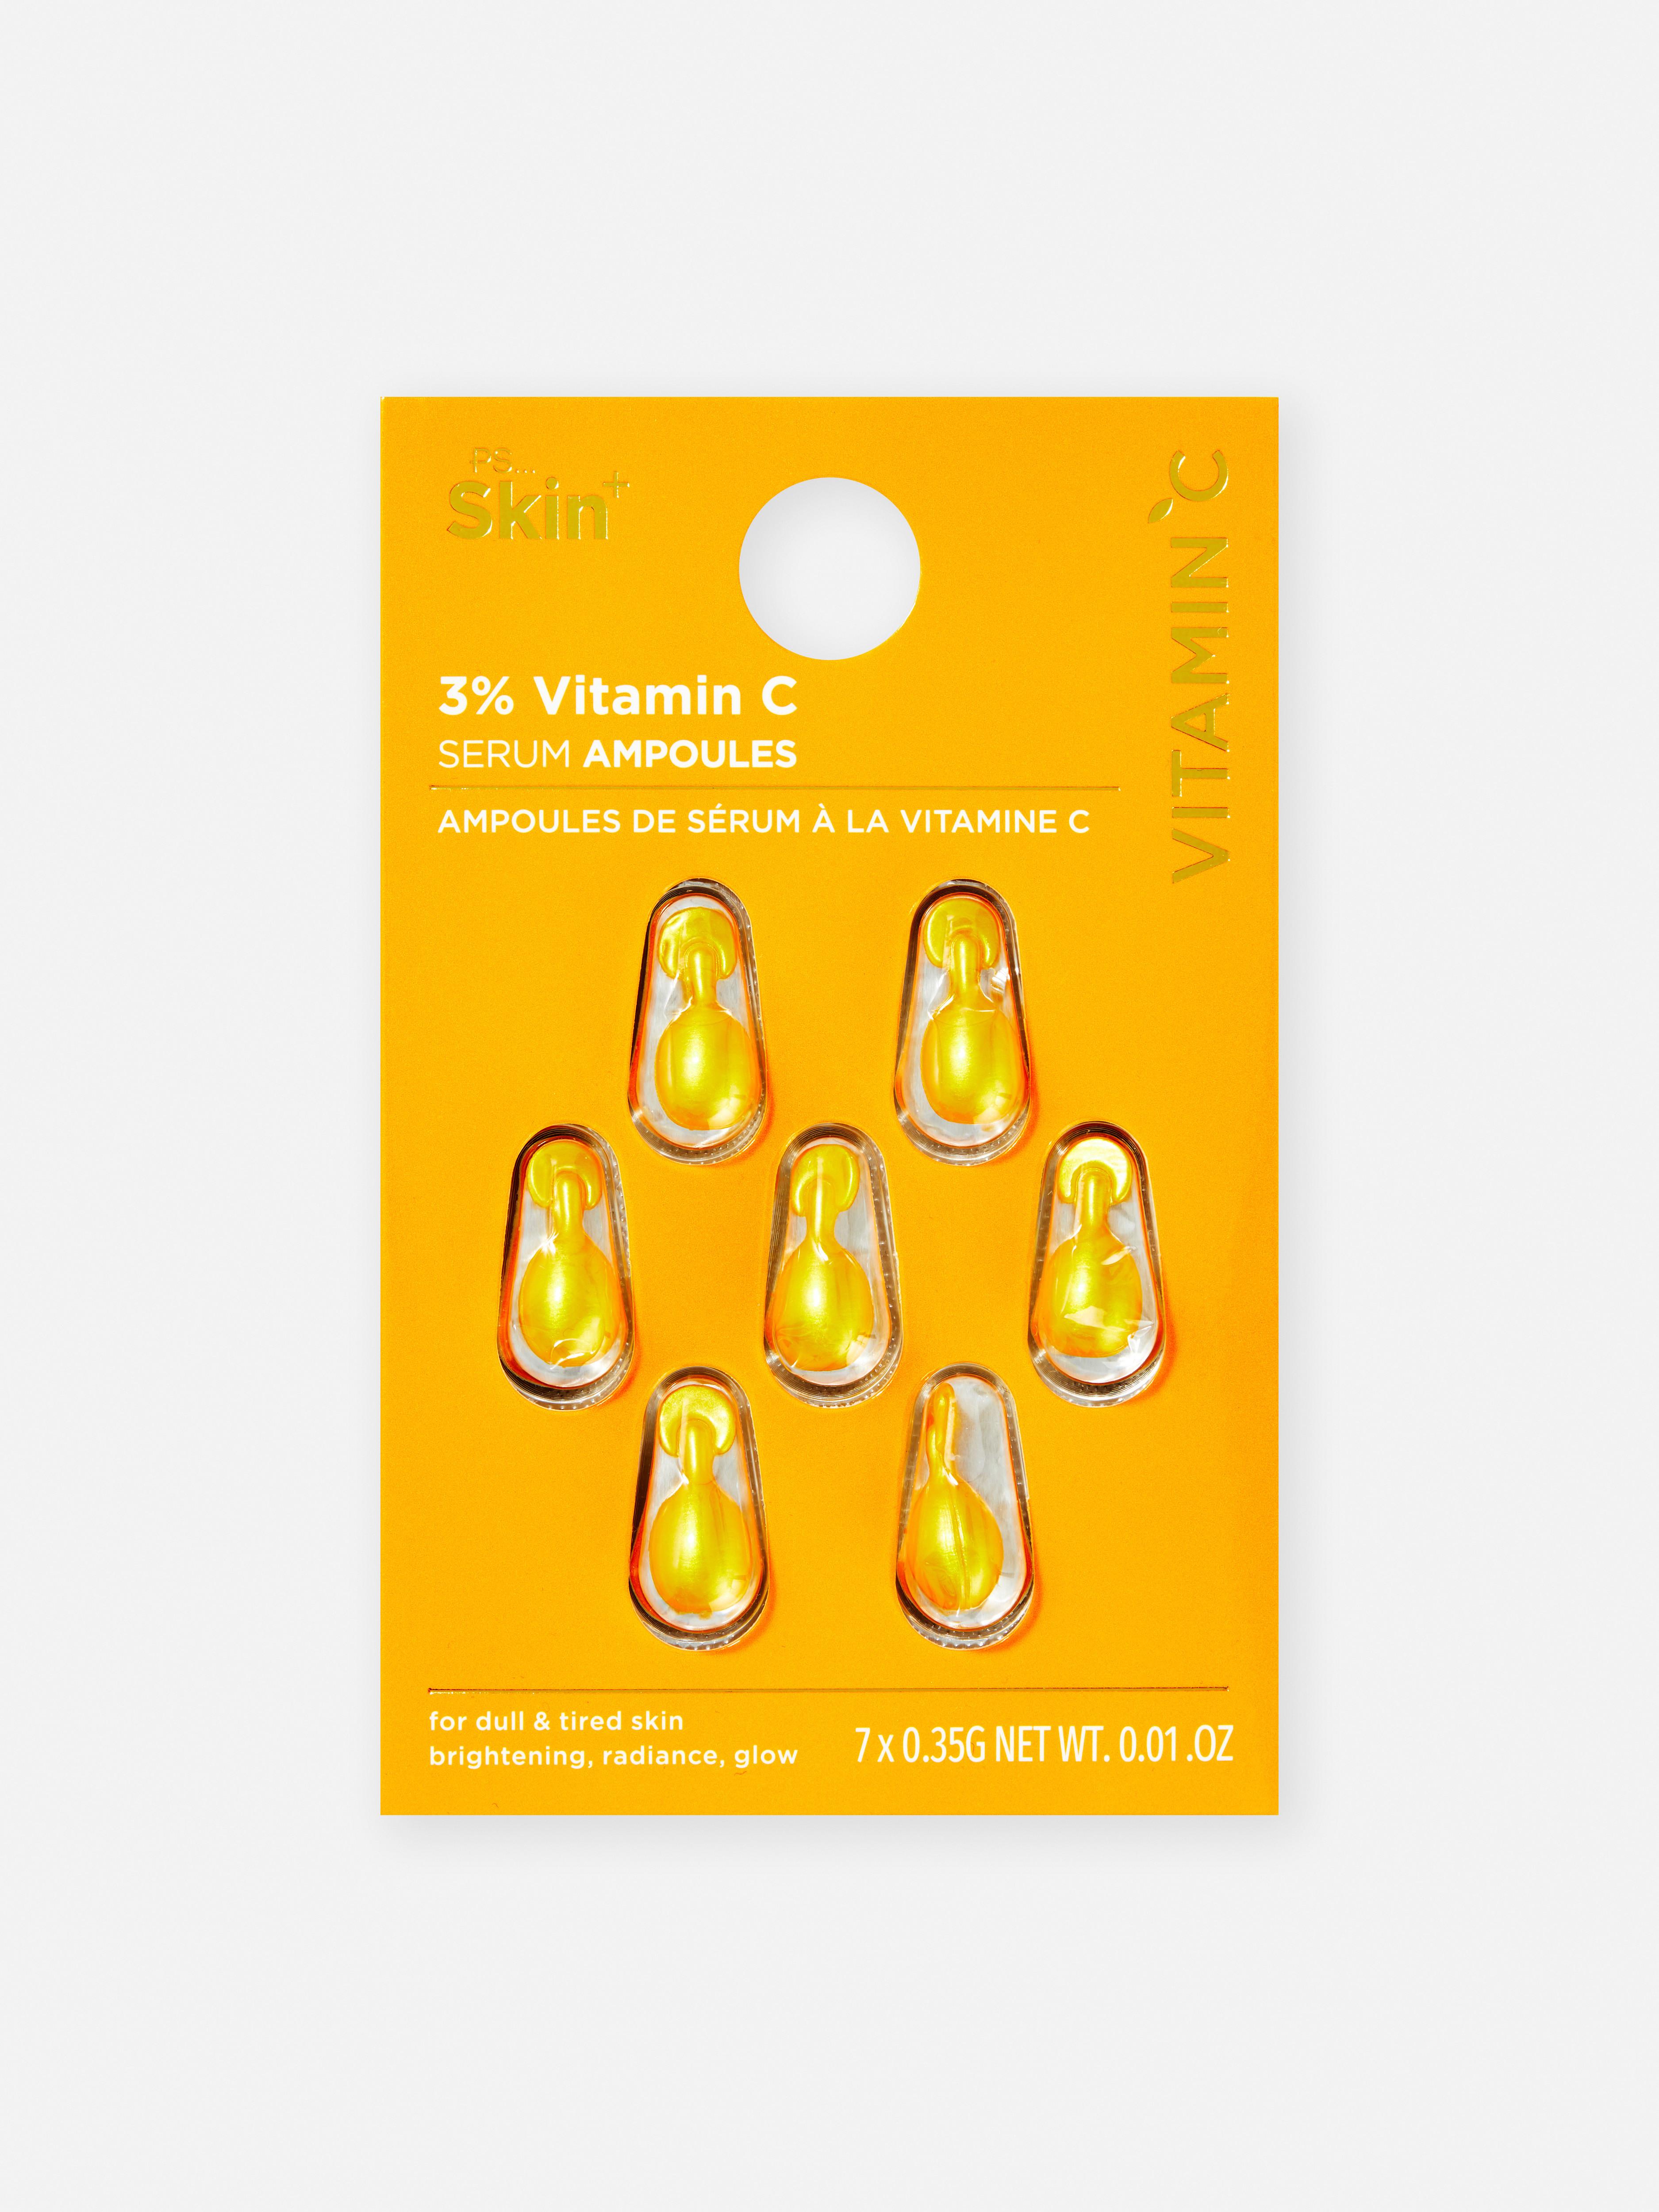 PS… Skin + Vitamin C Serum Ampoules